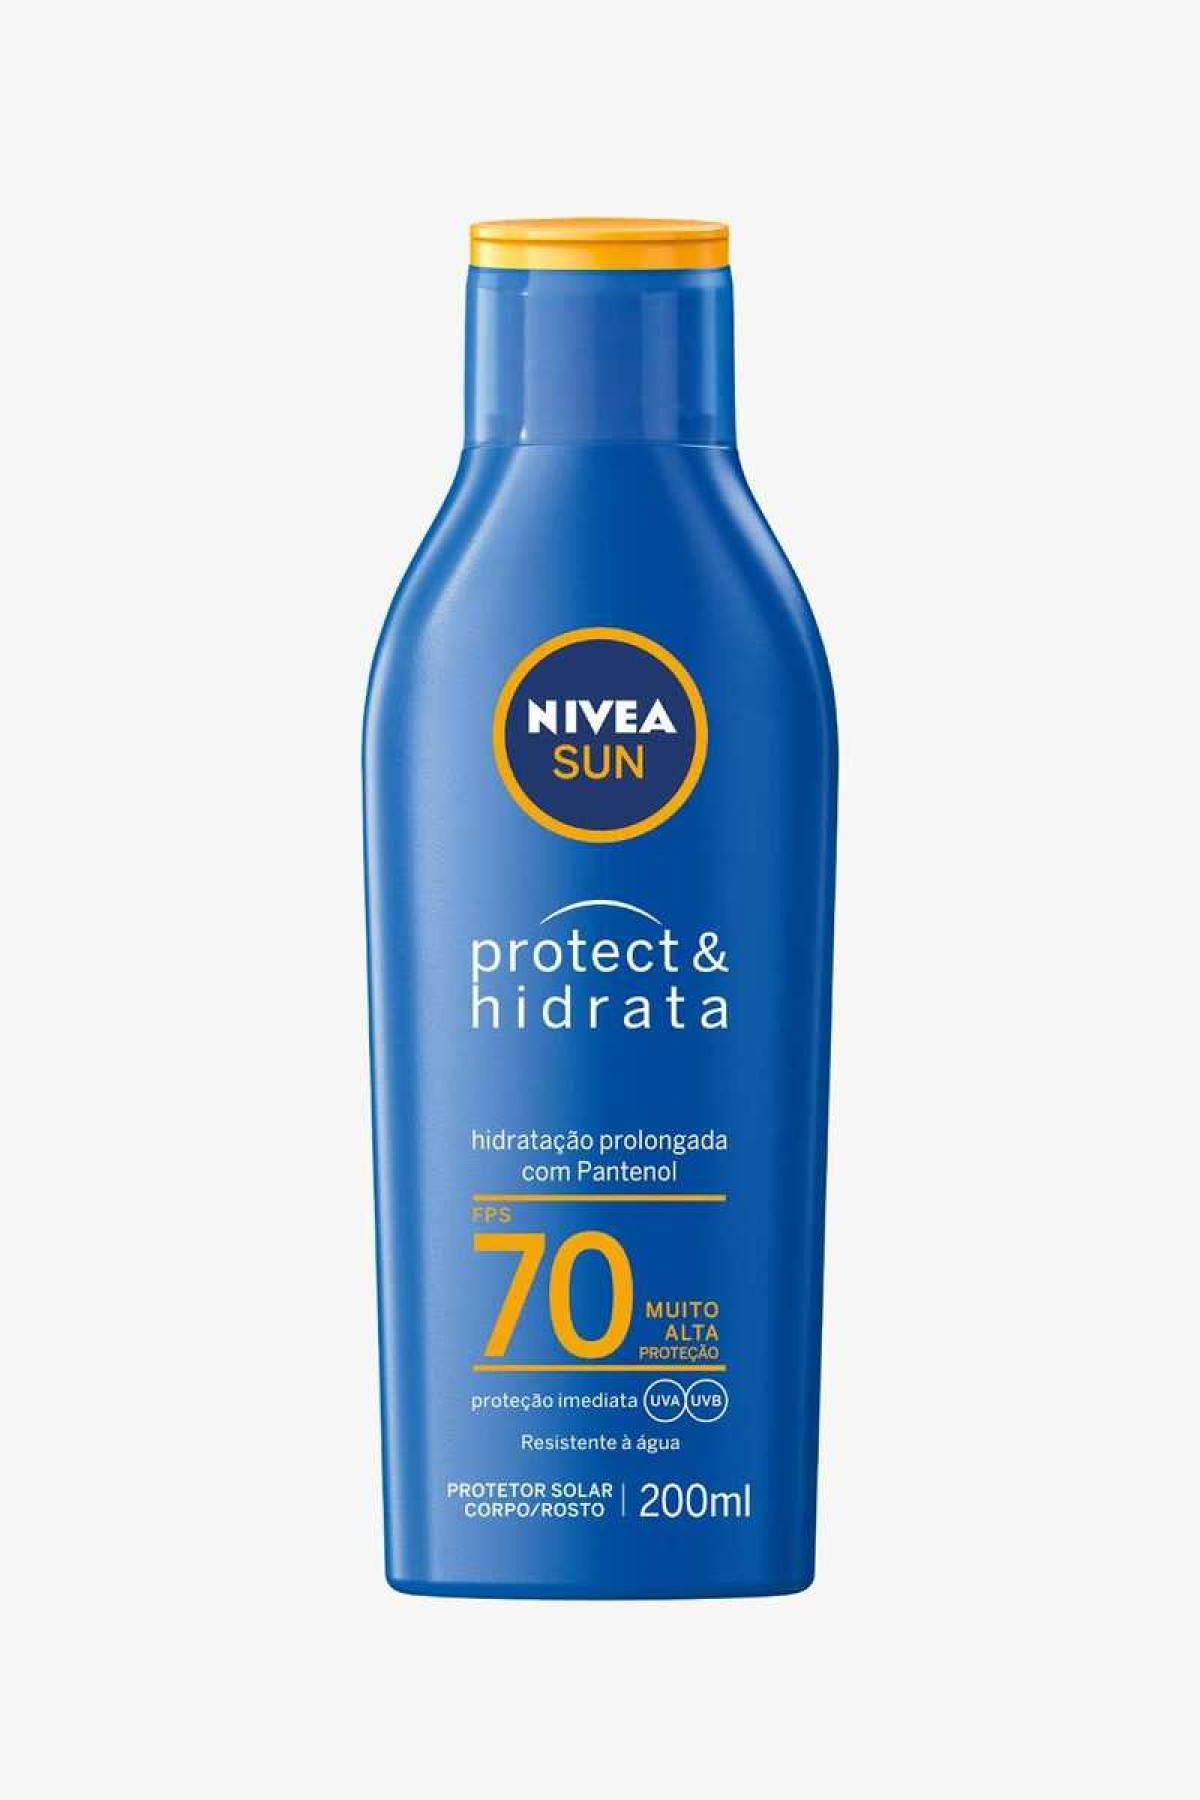 Nivea sun protect & hidrata FPS 70 Preço: 87,90